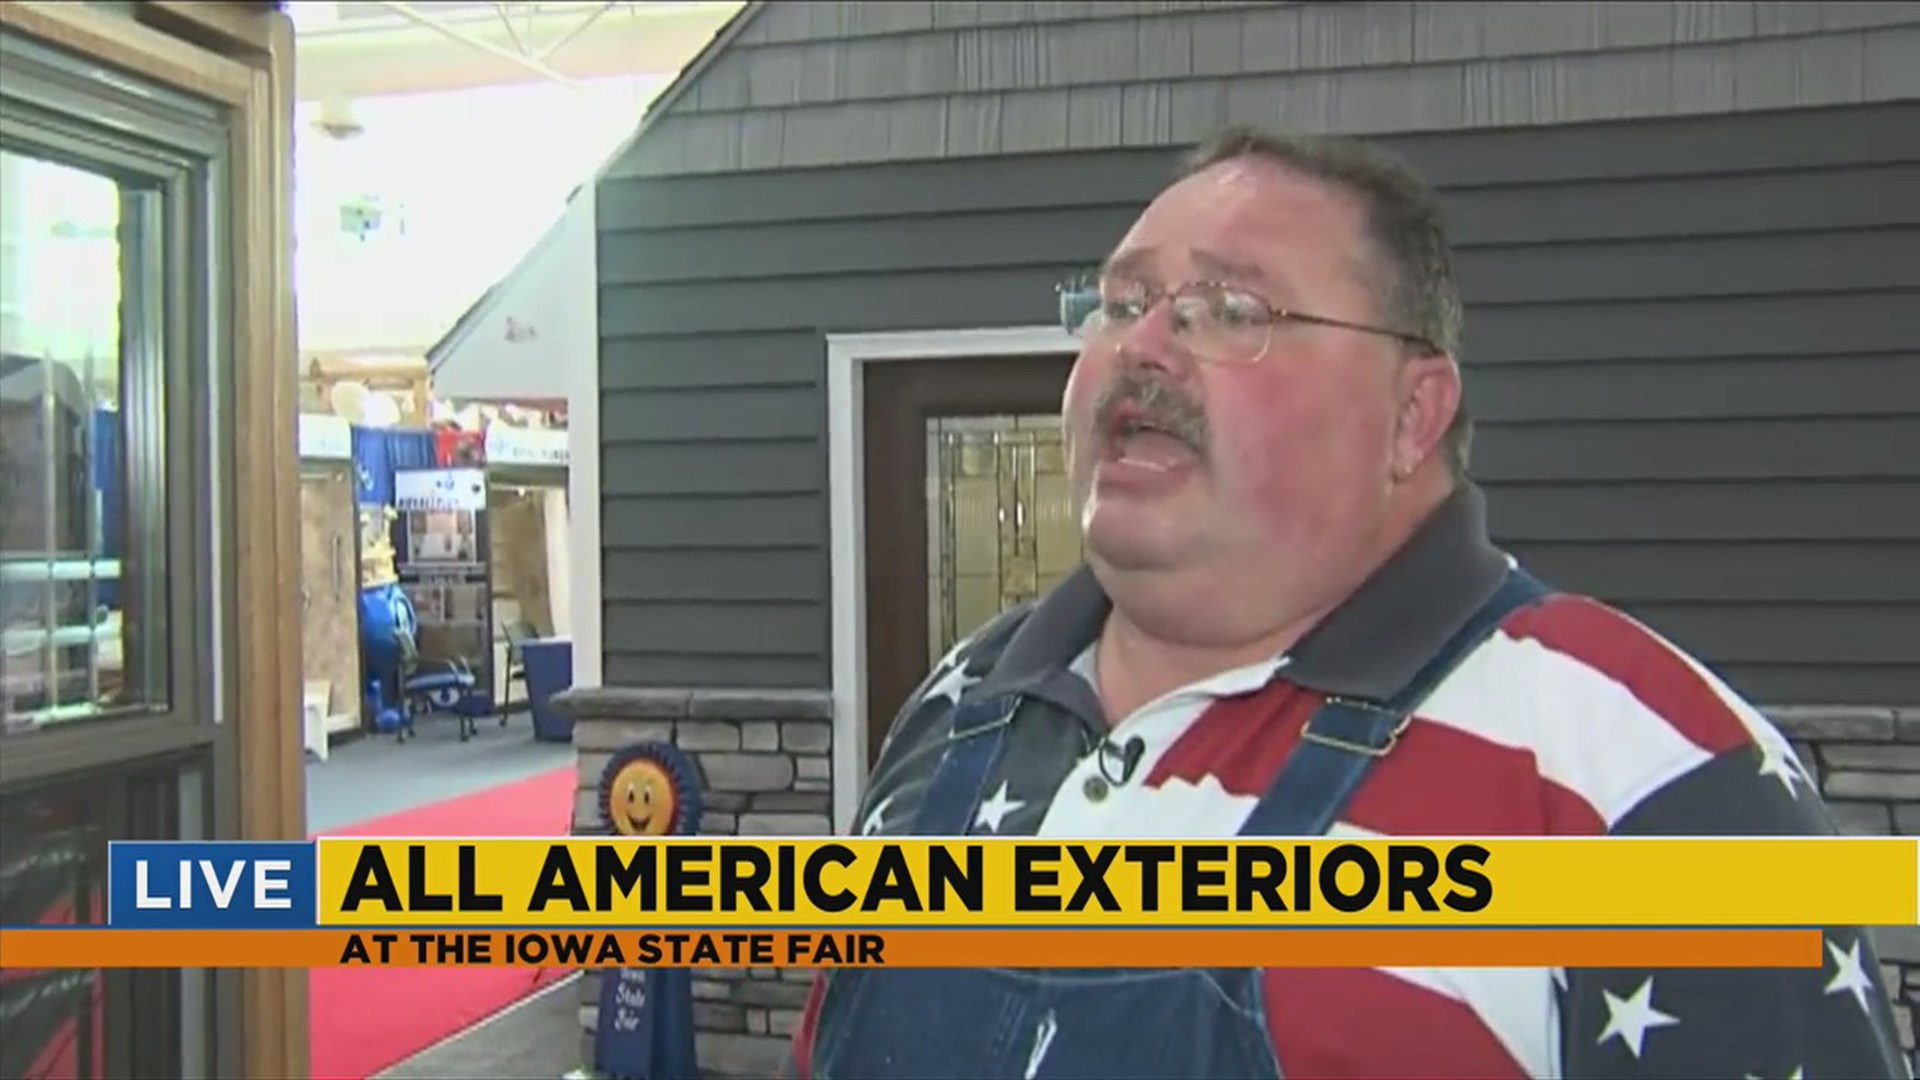 All American Exteriors at the Iowa State Fair - Windows